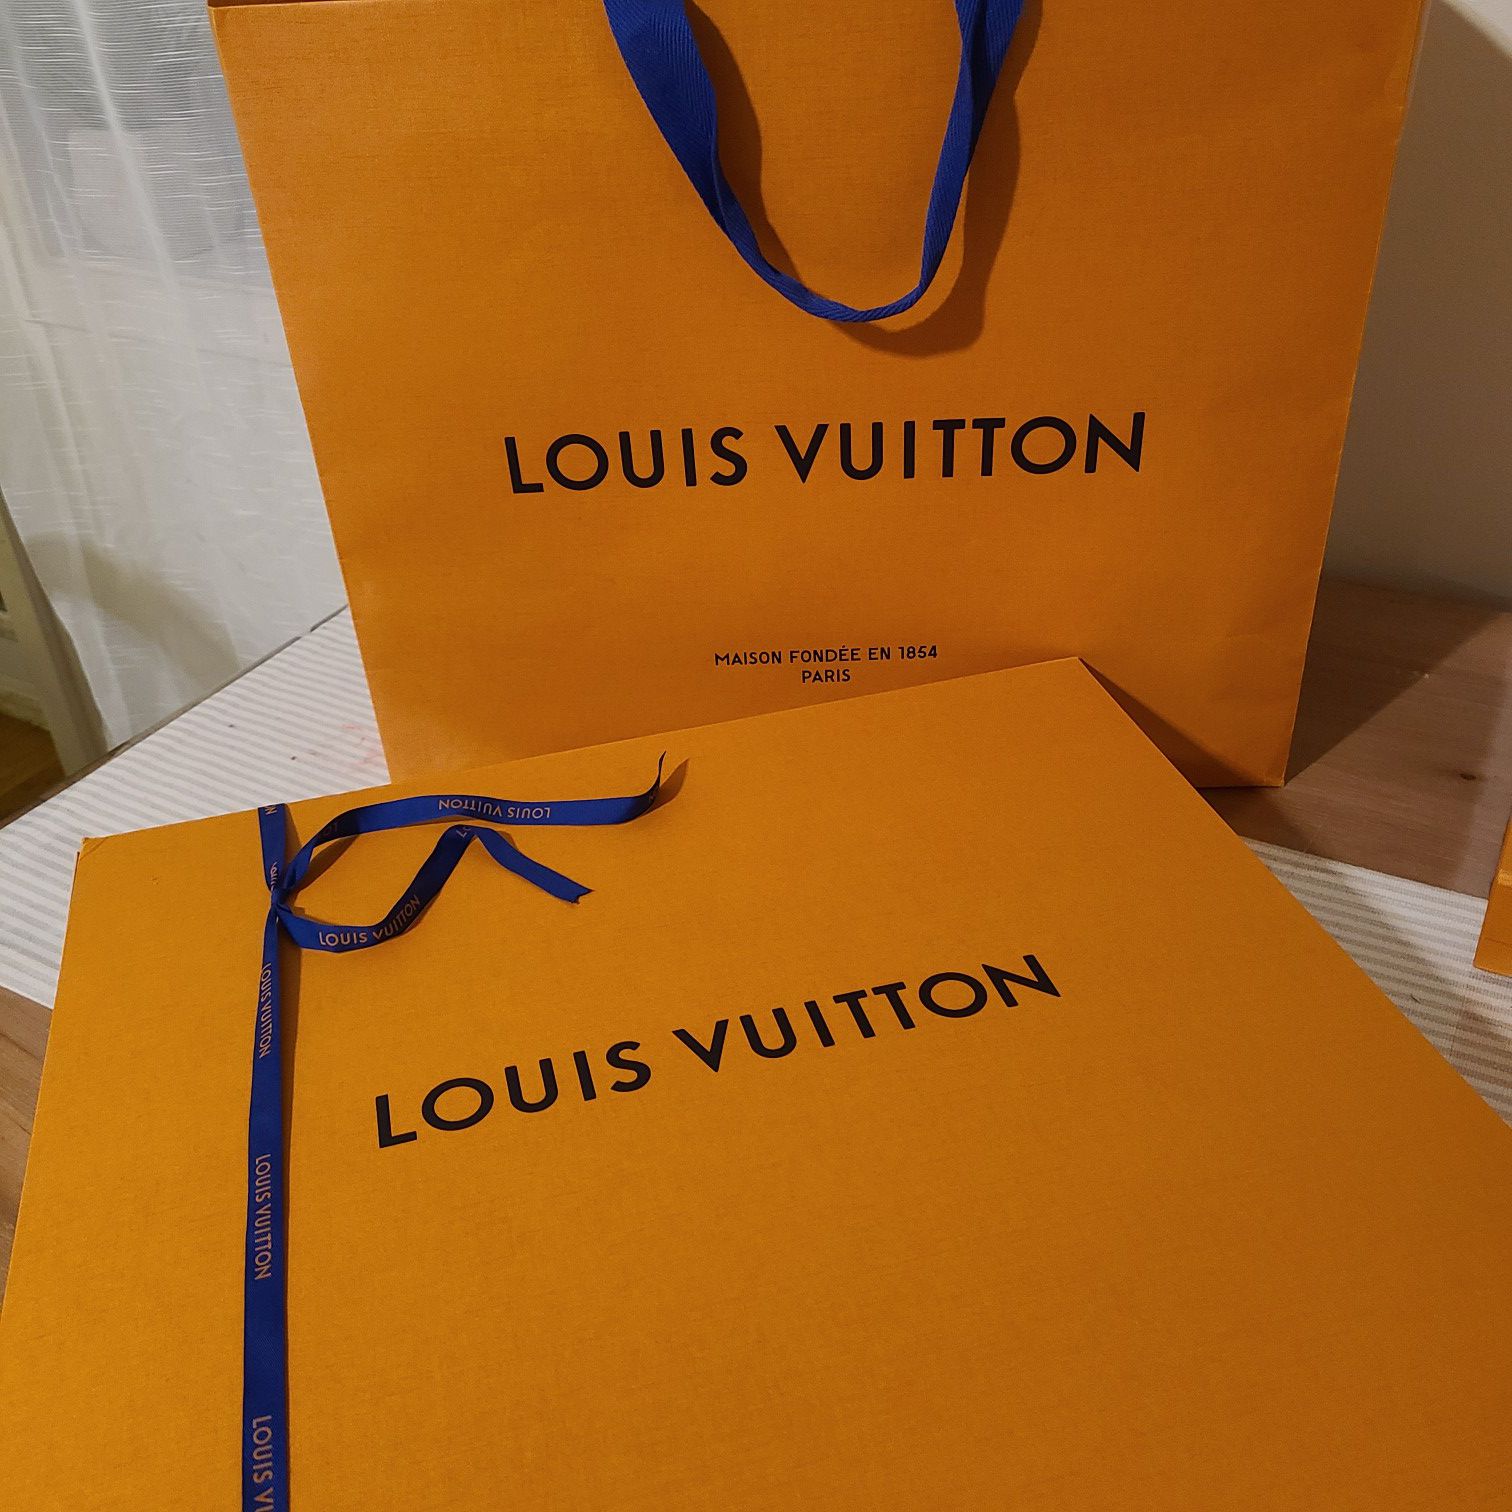 Louis Vuitton shopping bag and box